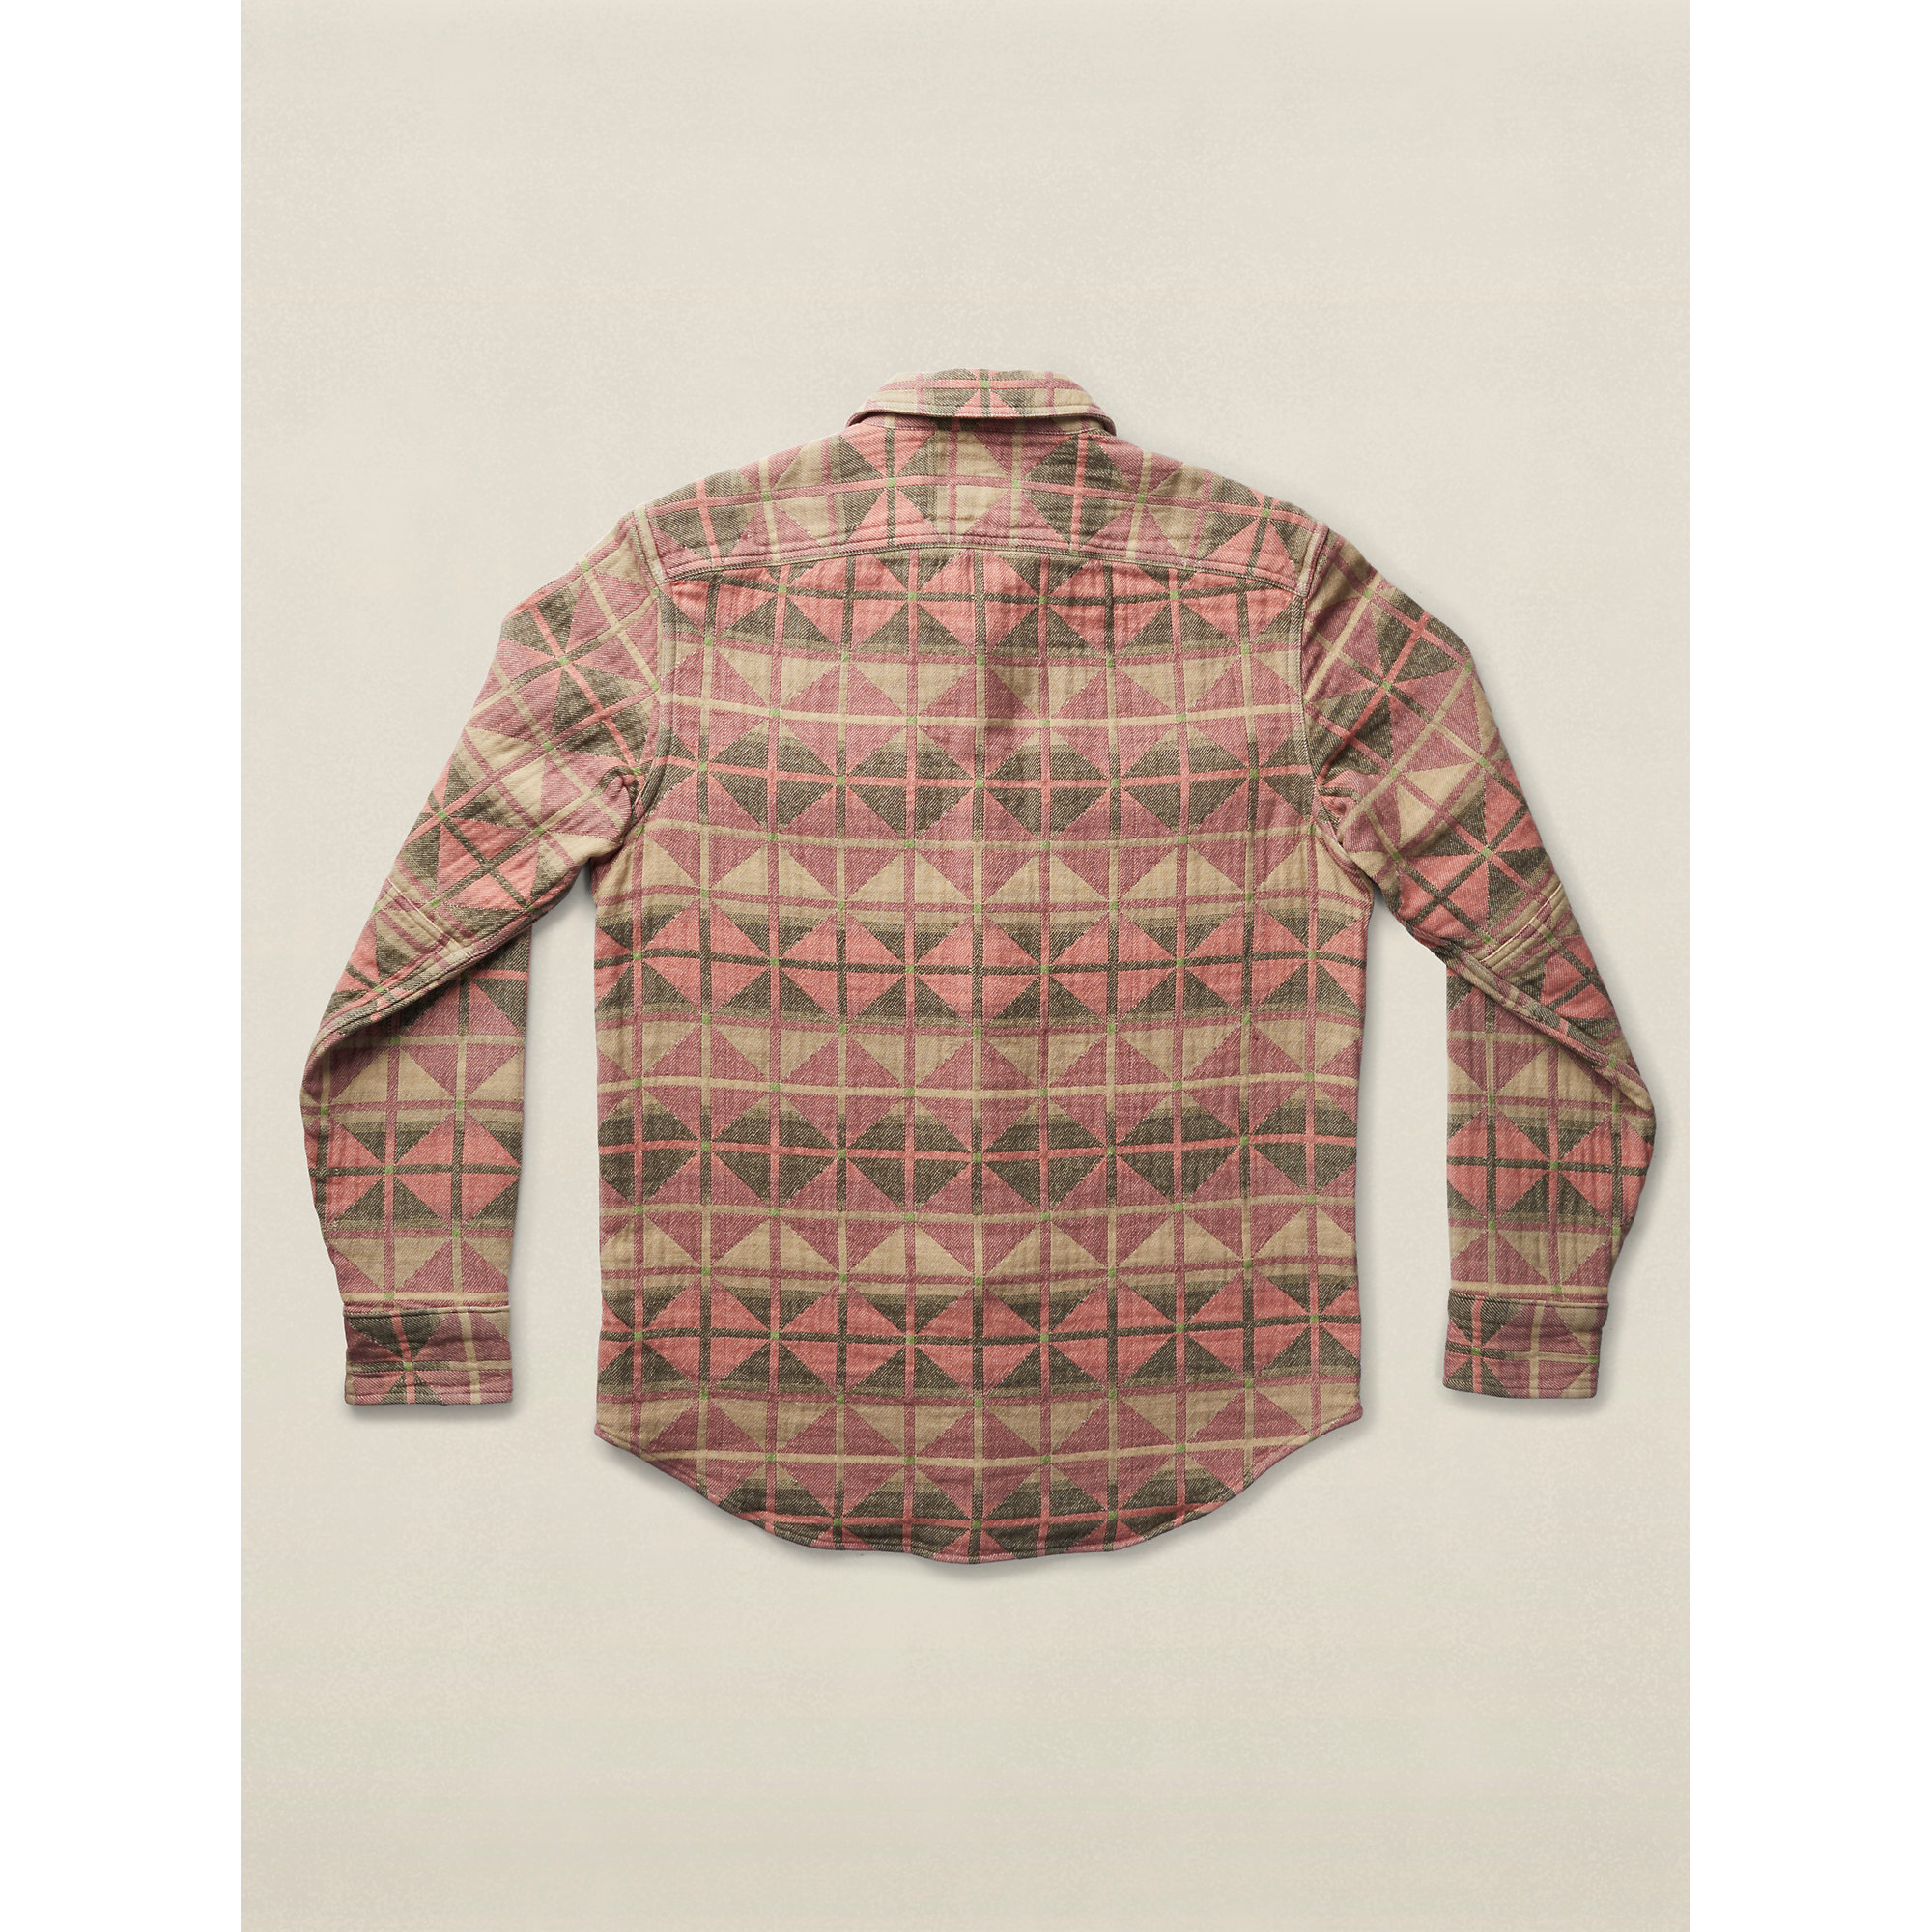 Lyst - RRL Cotton Jacquard Shirt in Pink for Men